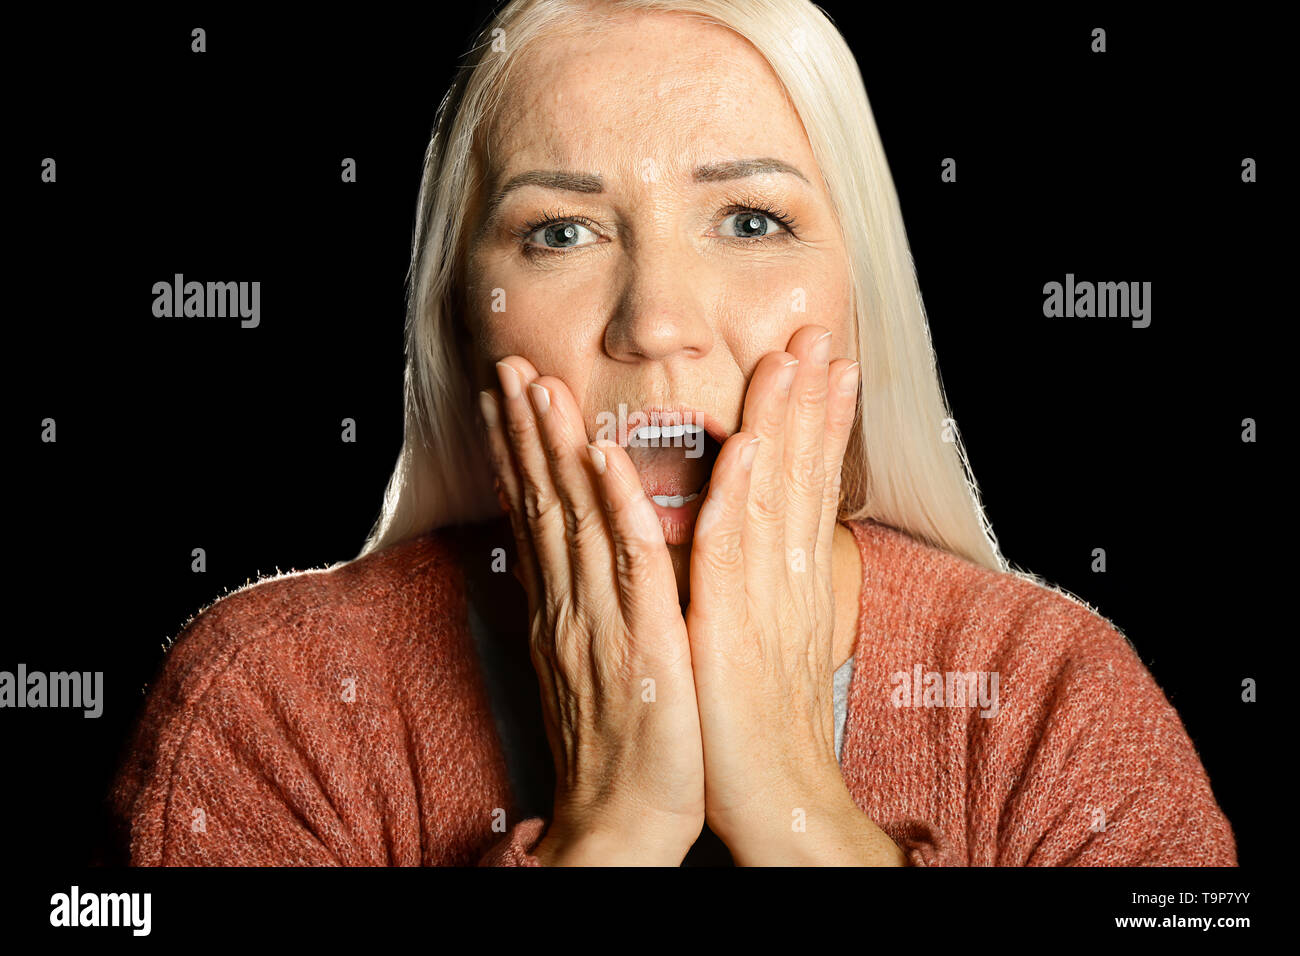 Portrait of screaming mature woman on dark background Stock Photo